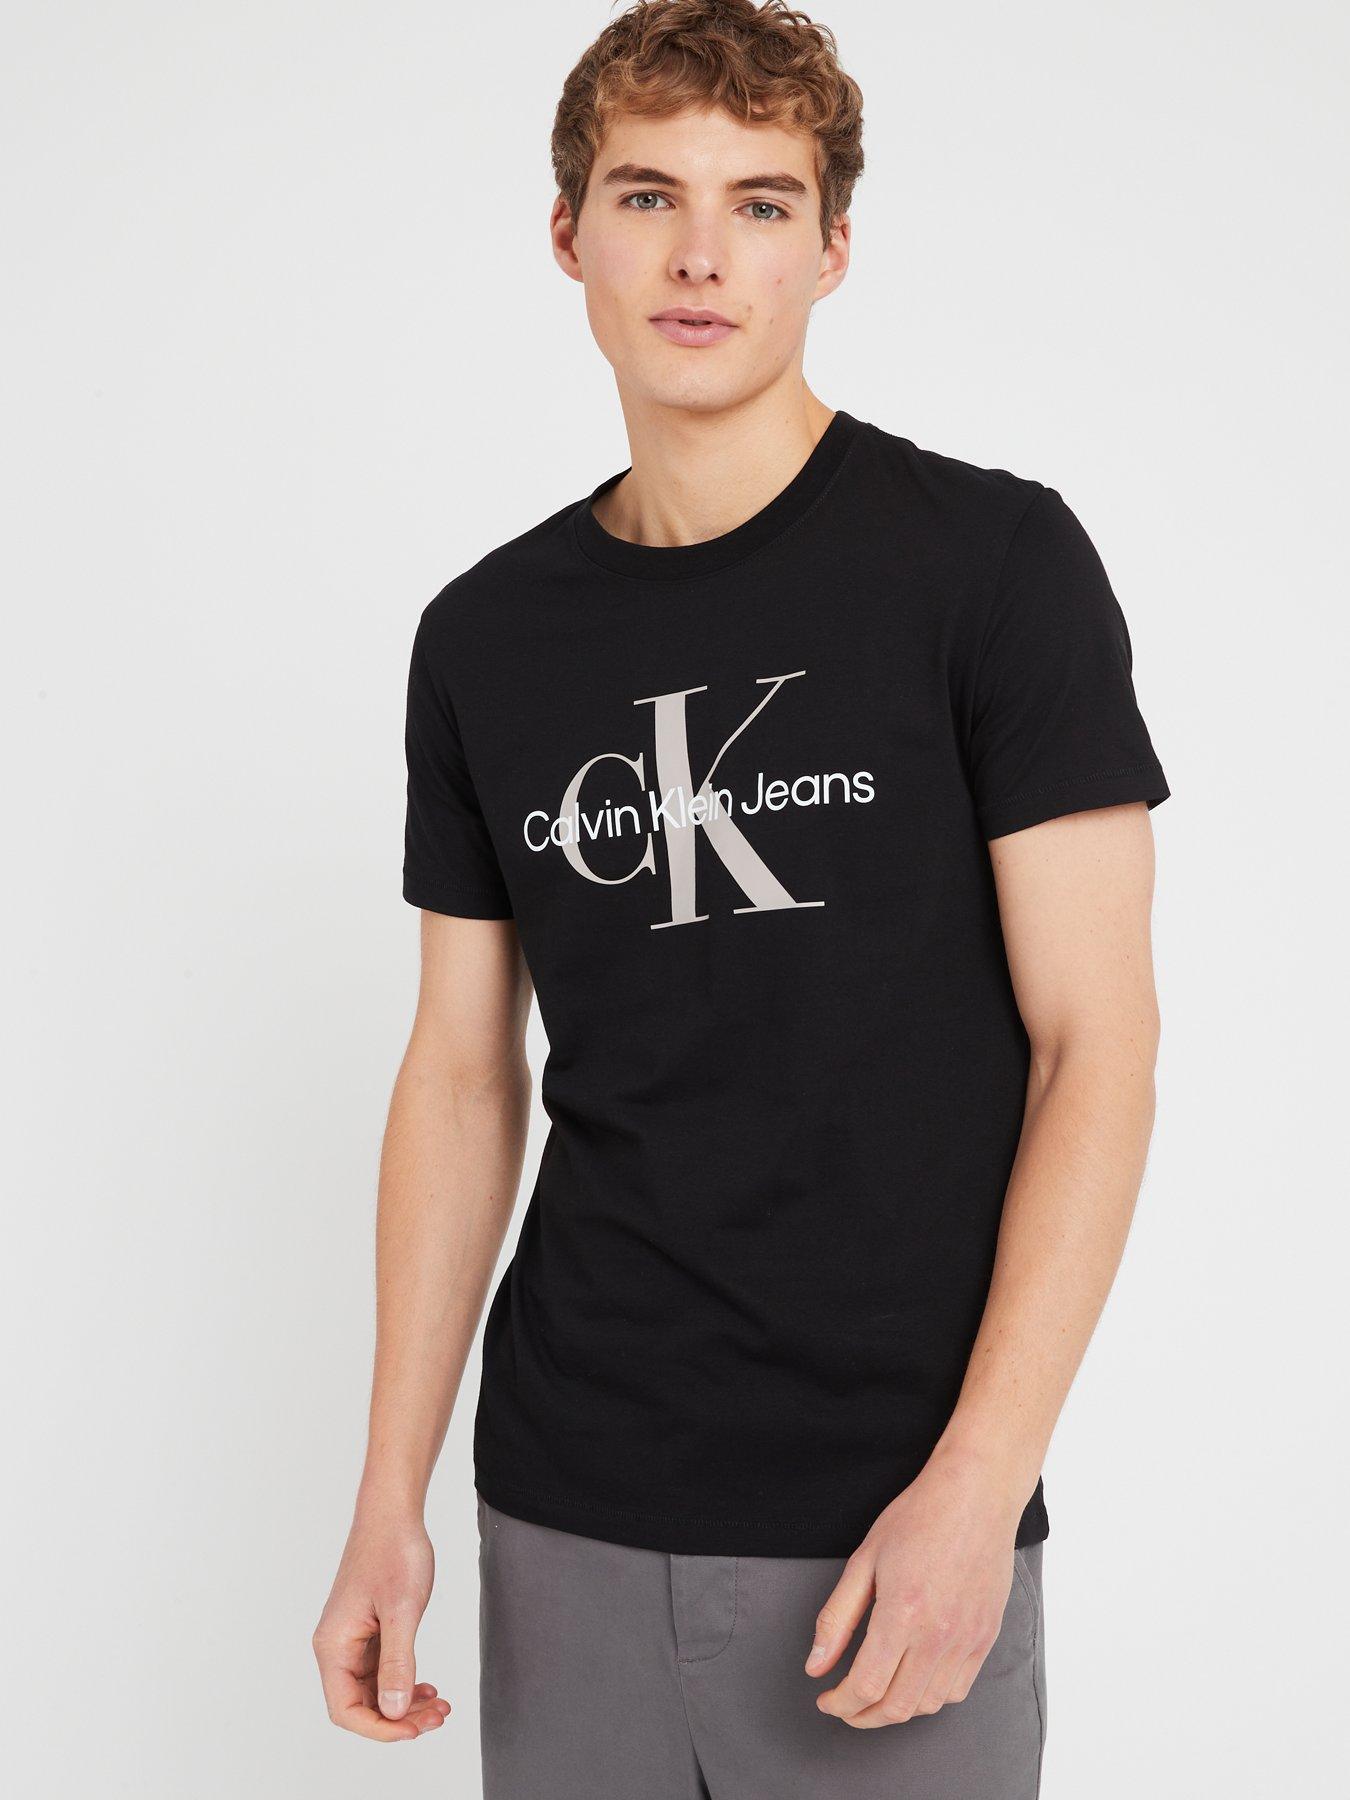 Black | Calvin klein polos | Ireland Very | & T-shirts | Men